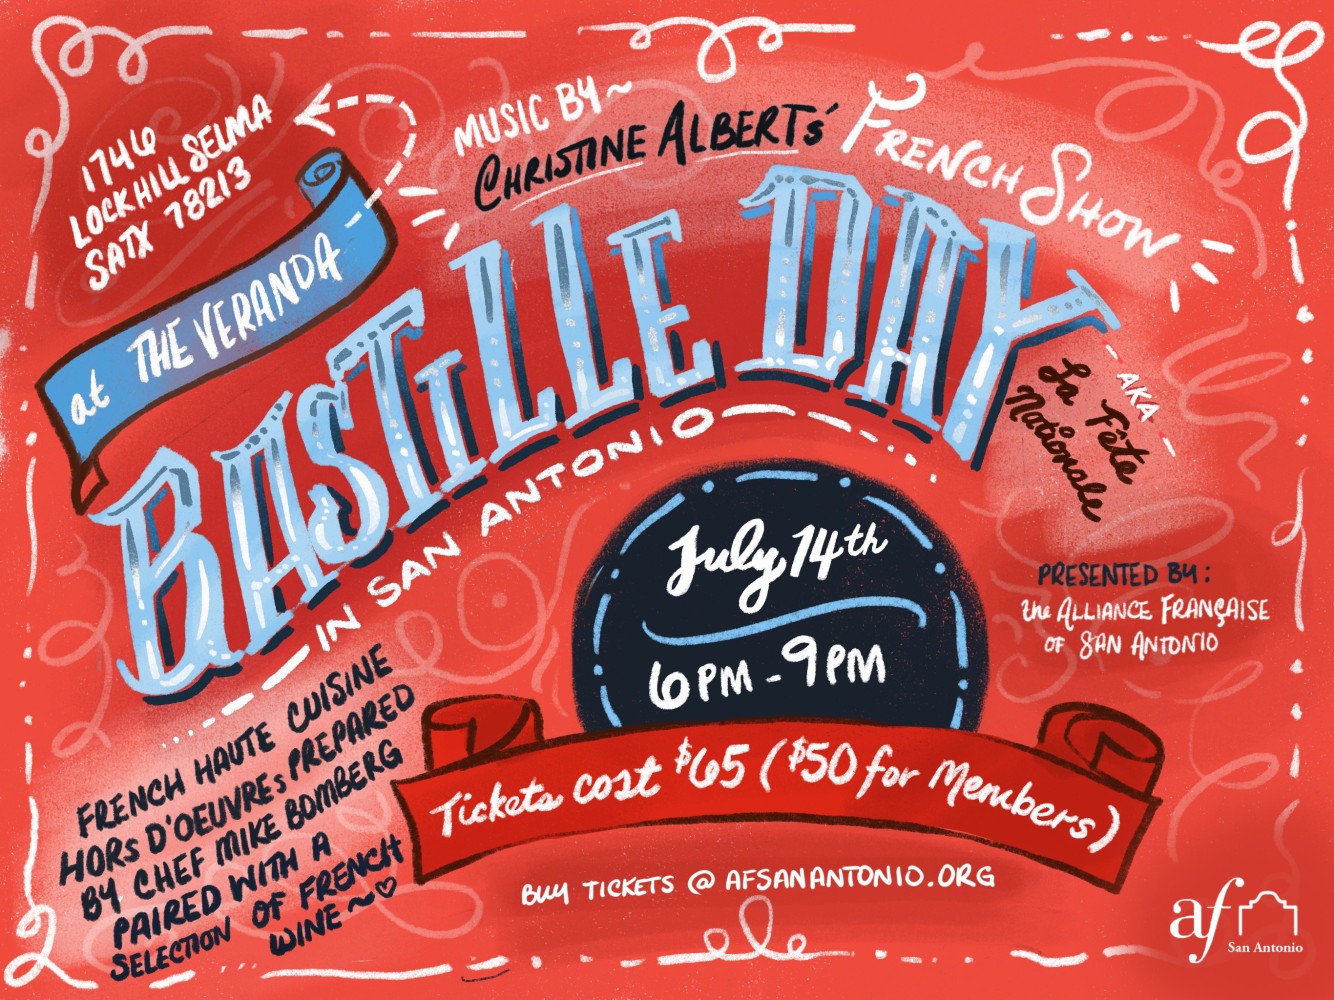 Bastille Day Evening (14 juillet) in San Antonio!